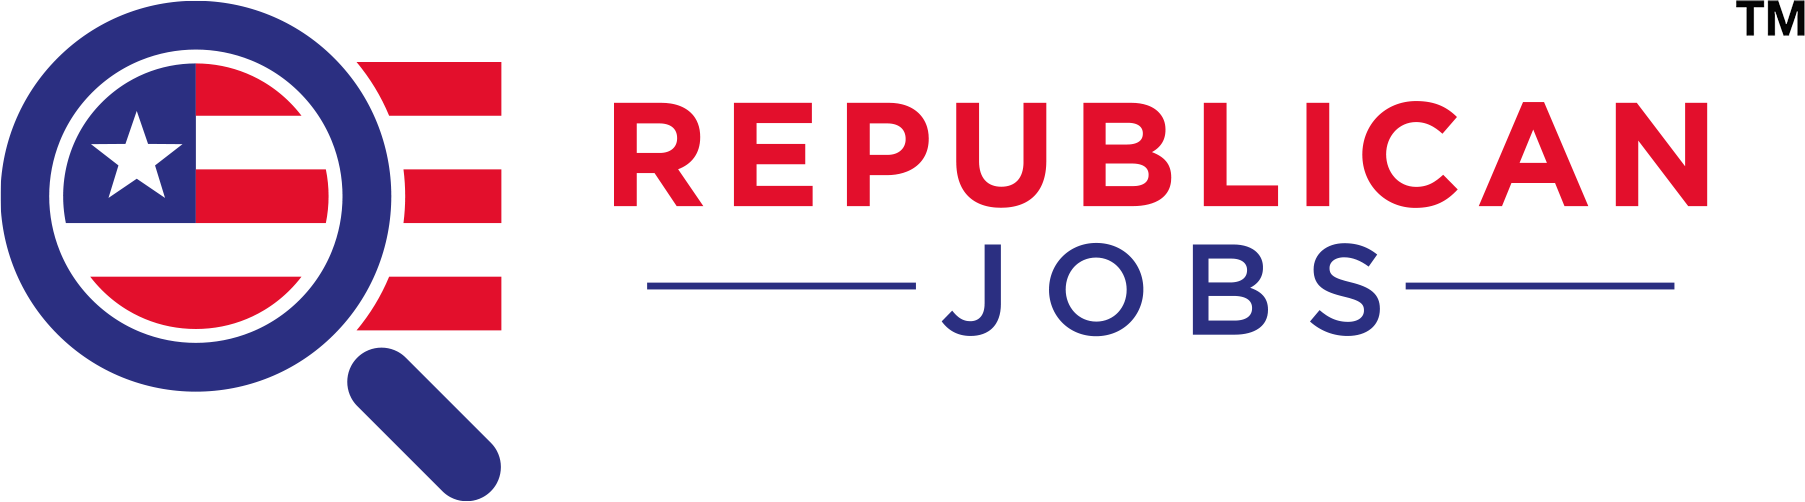 Republican jobs in Town N Country Florida jobs